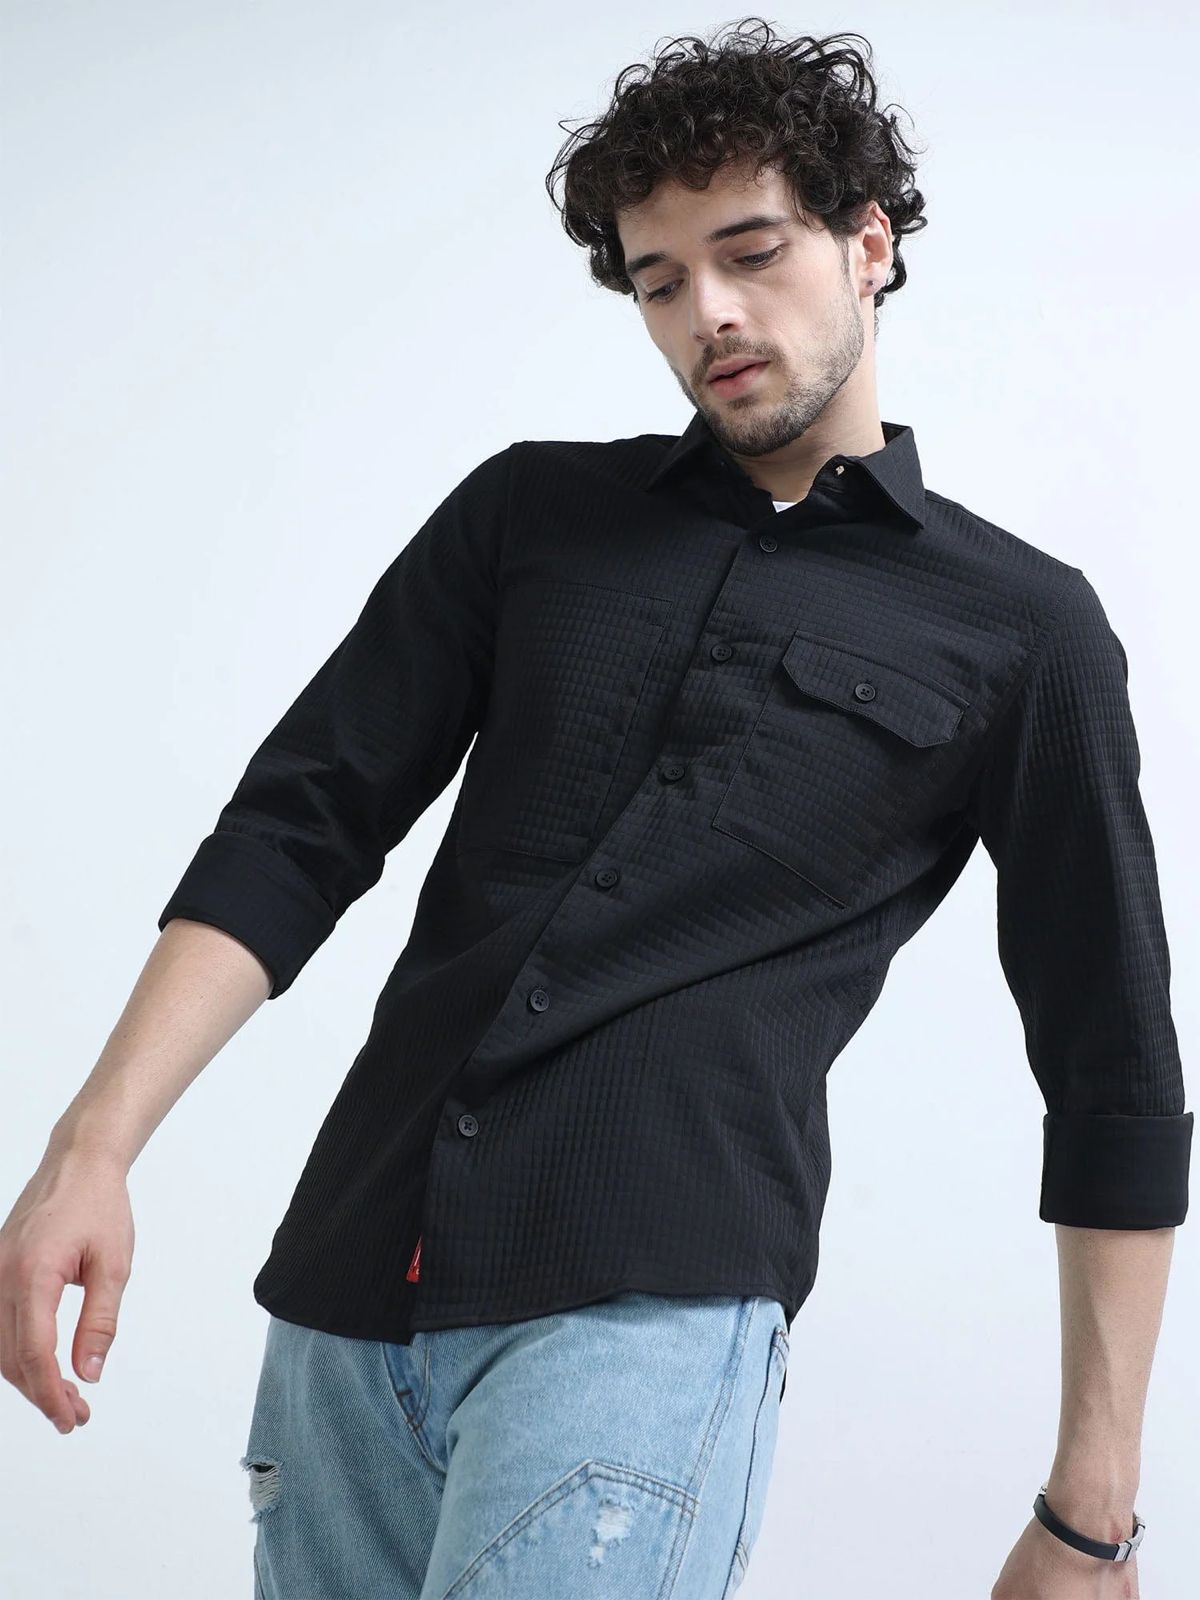 Zara Original Denim Shirt Colour - Blue|Black|Charcoal Size - S/M/L/Xl/XXL  Rate - 1250/- For Order - 9821327990 | Instagram